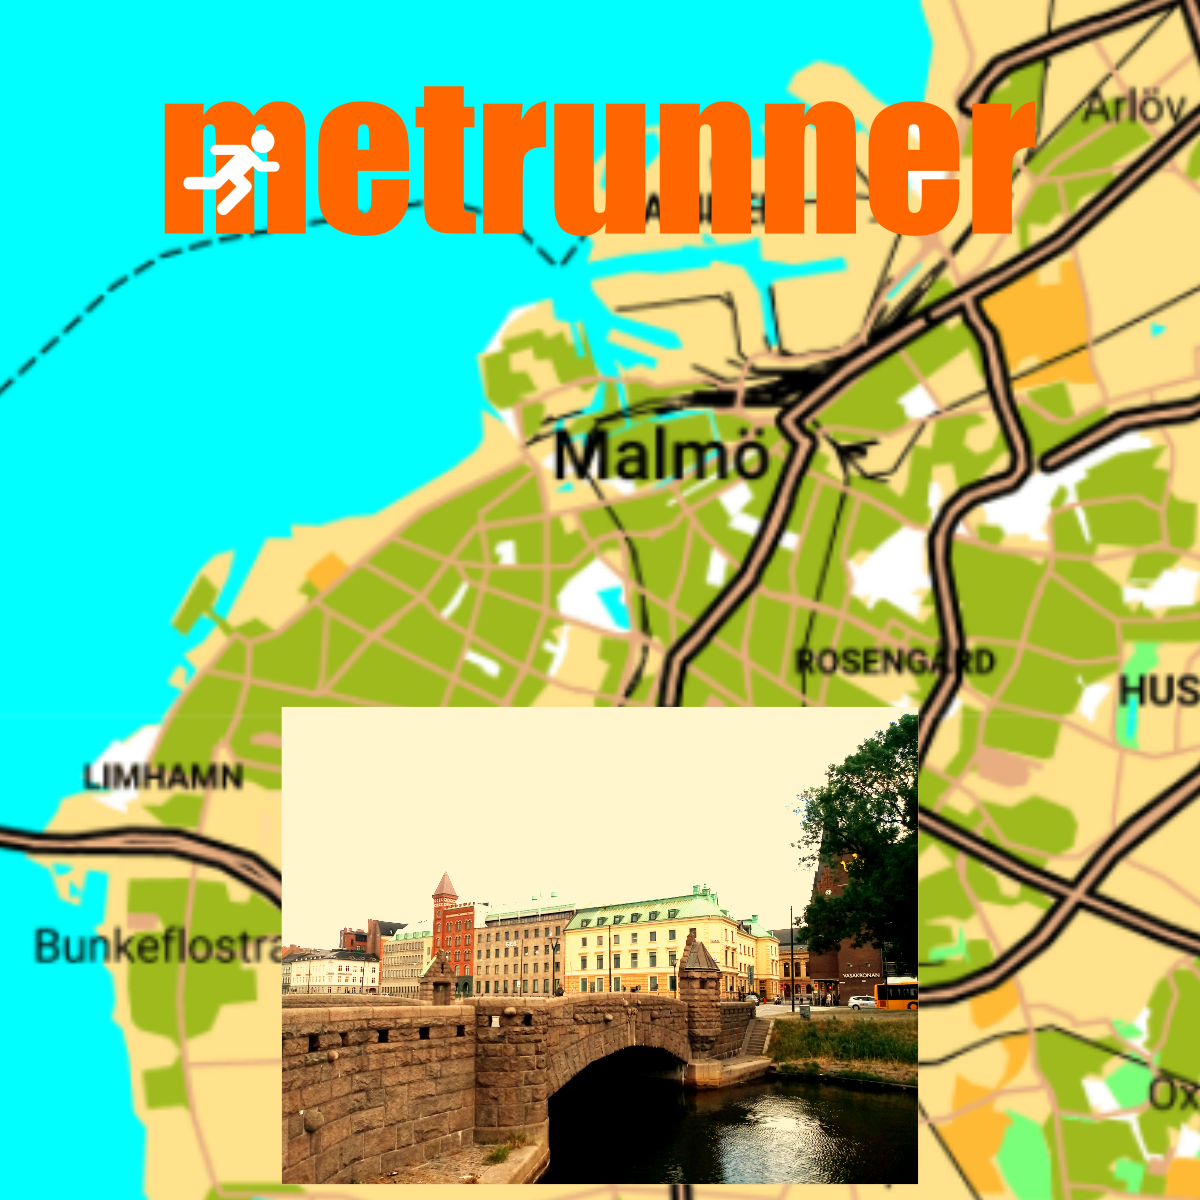 Malmö, Sweden on Metrunner's Orienteering Map of the World